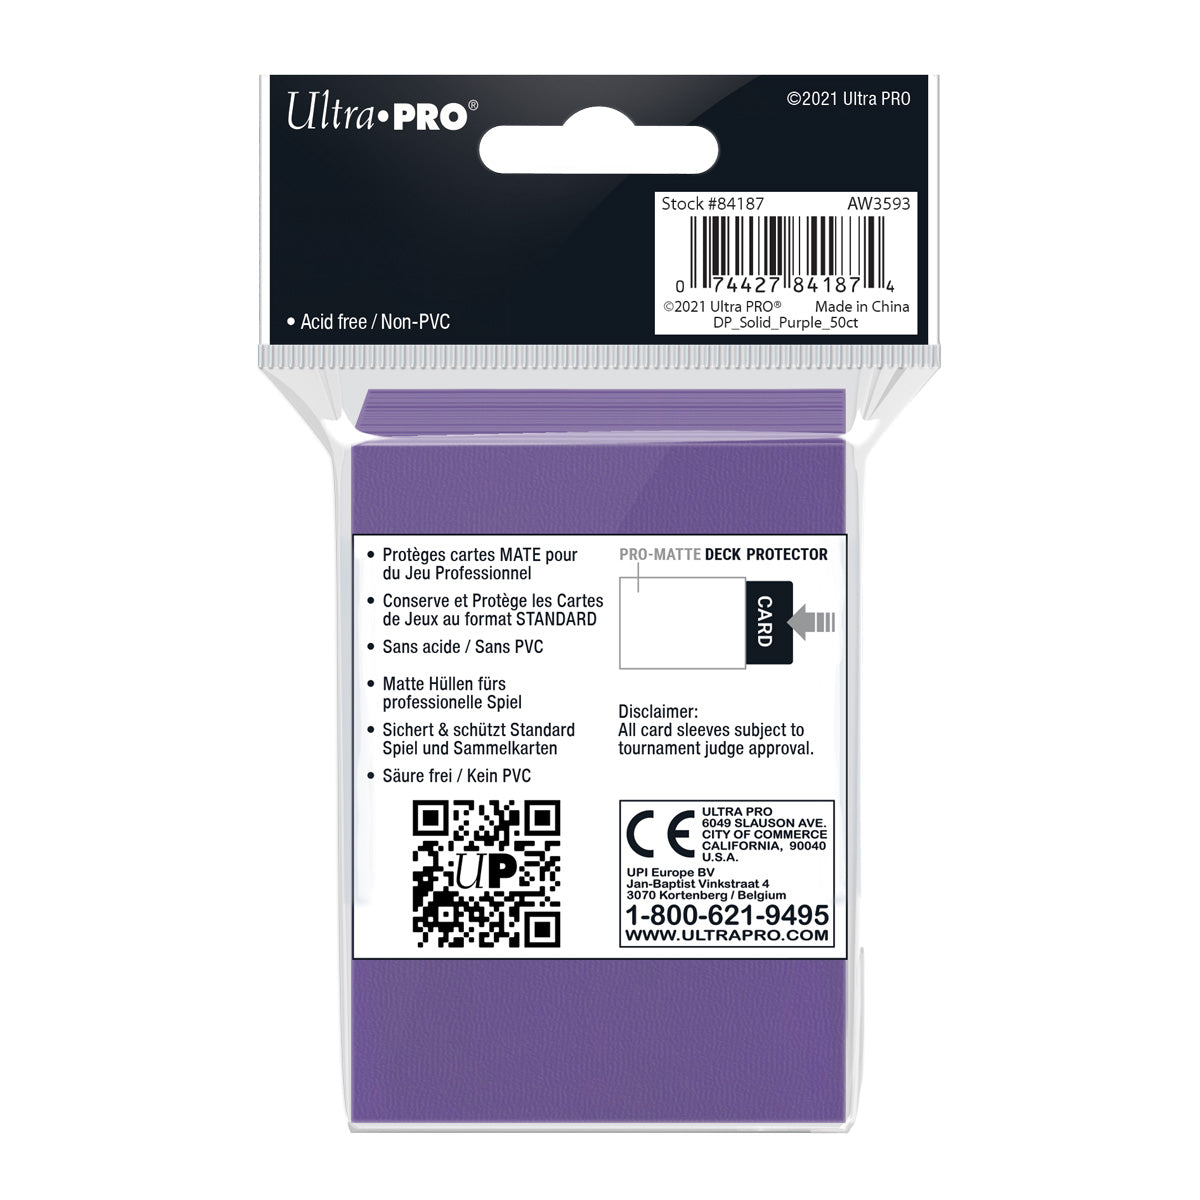 Ultra PRO Card Sleeve Pro-Matte Standard 50ct - Purple